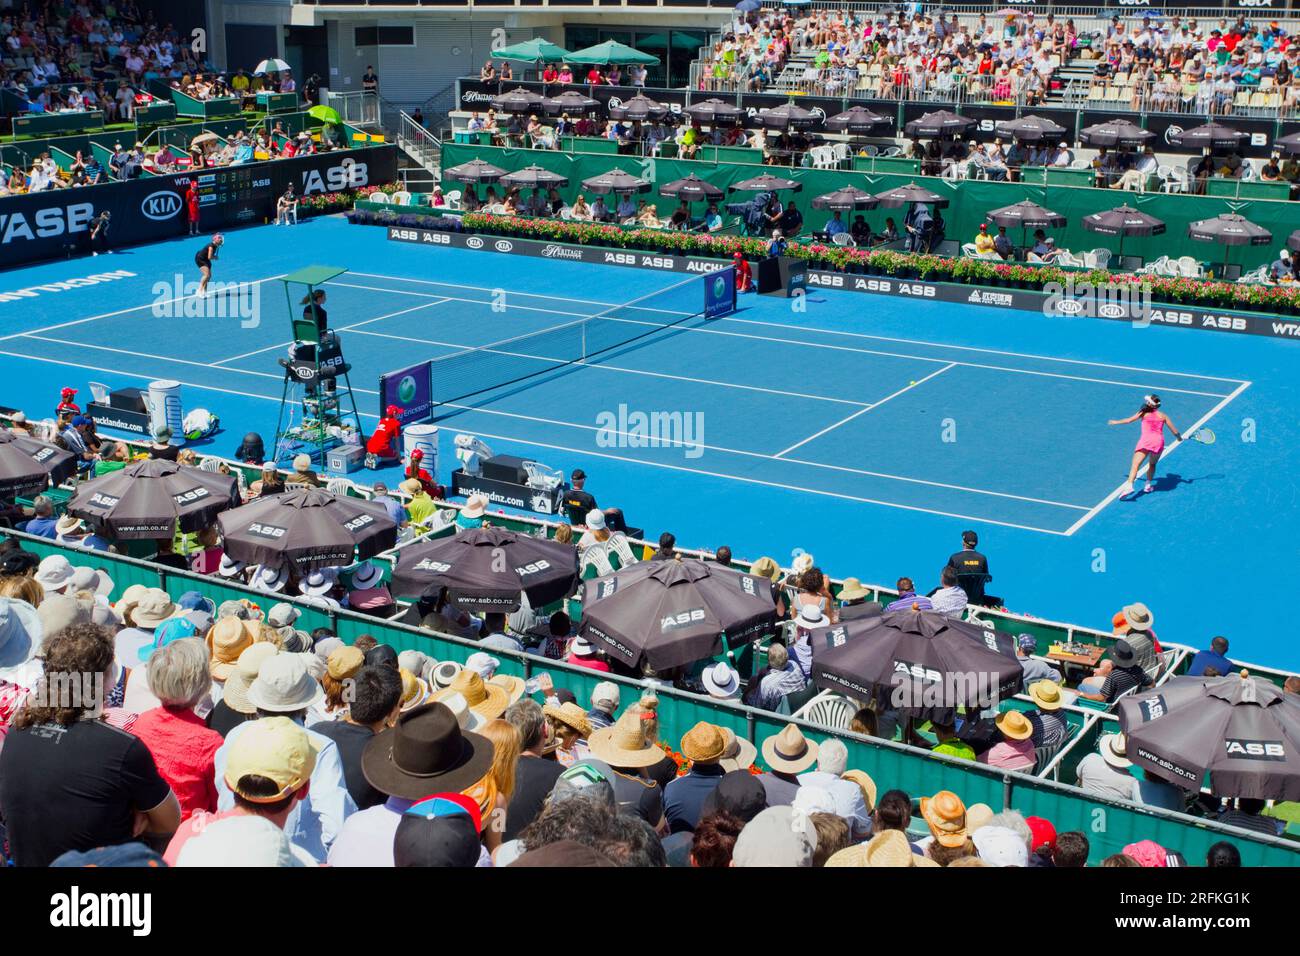 Una panoramica dell'ASB Tennis Centre di Auckland come Aravane Rezai, Francia, sinistra, gioca contro Shuai Peng, Cina all'ASB Classic Women's Tennis Tou Foto Stock